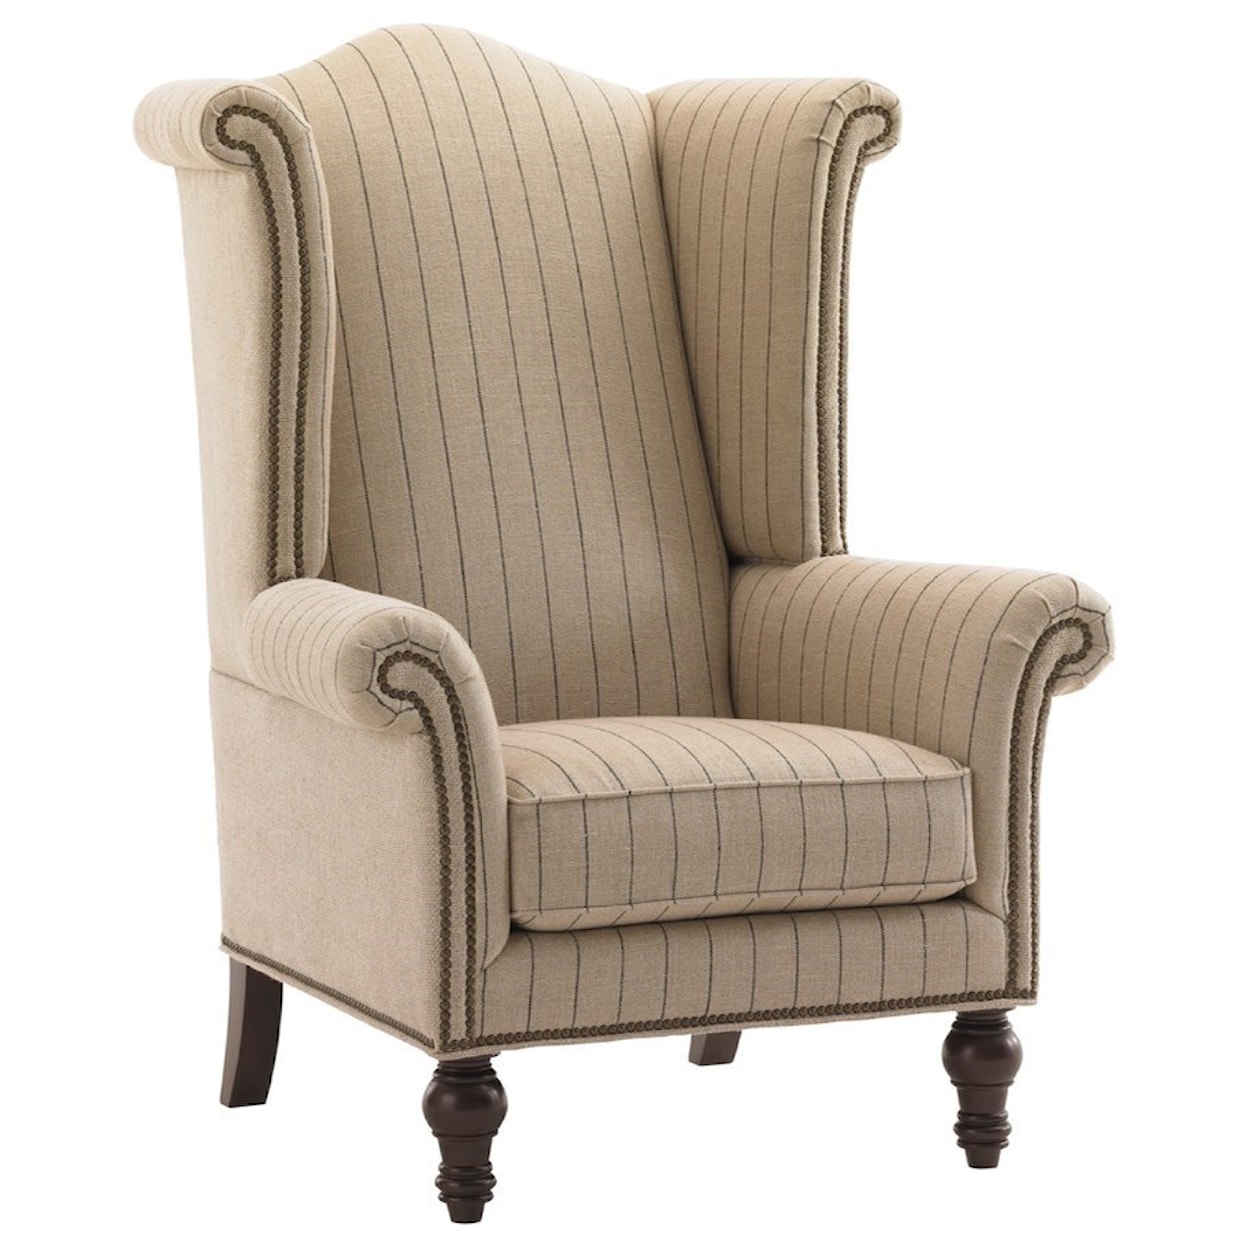 Lexington Lexington Upholstery Customizable Kings Row Wing Chair